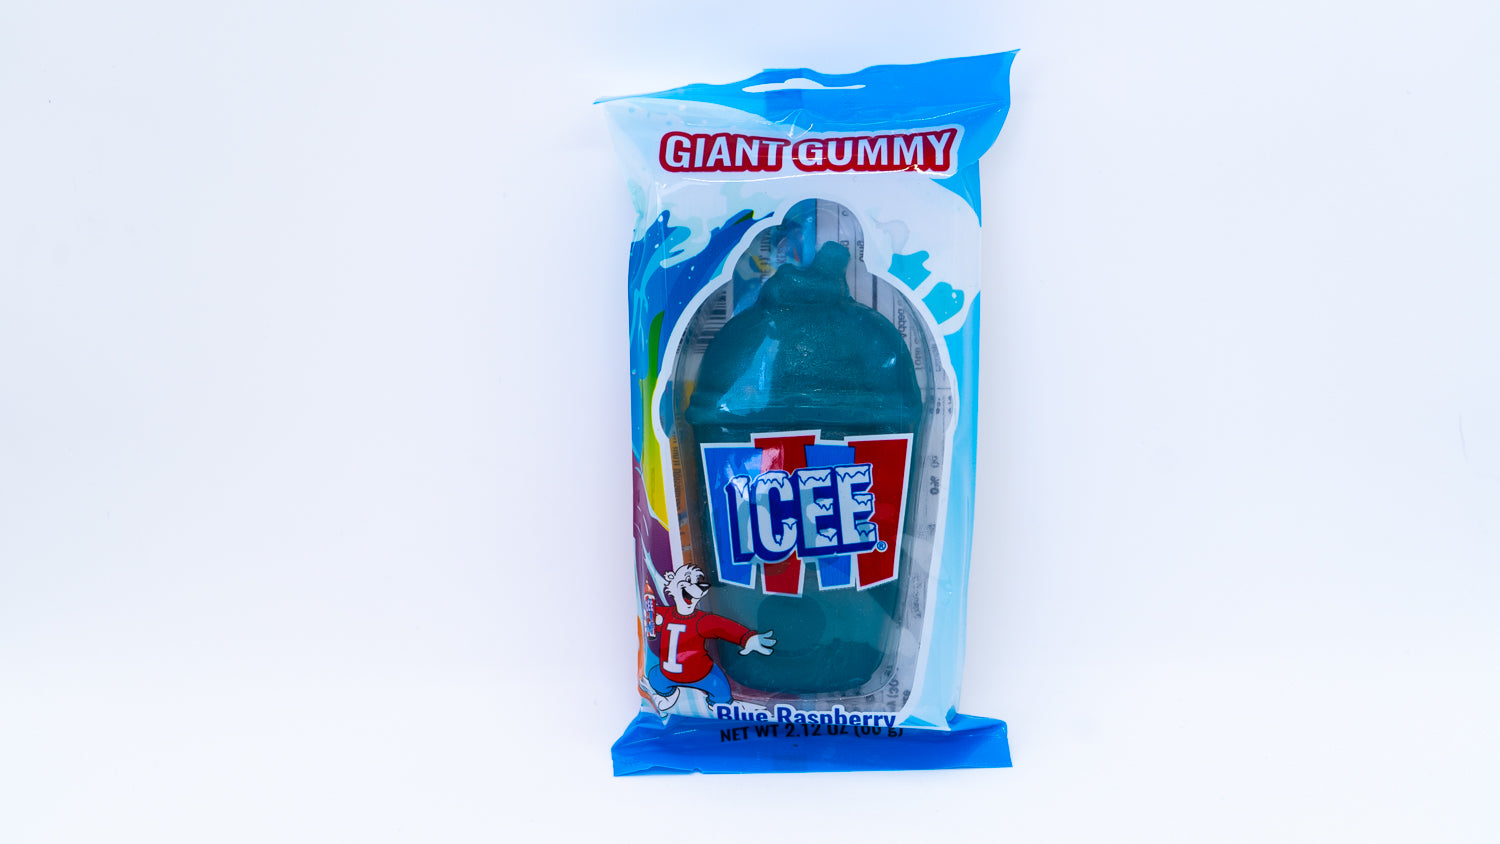 Icee Giant Gummy